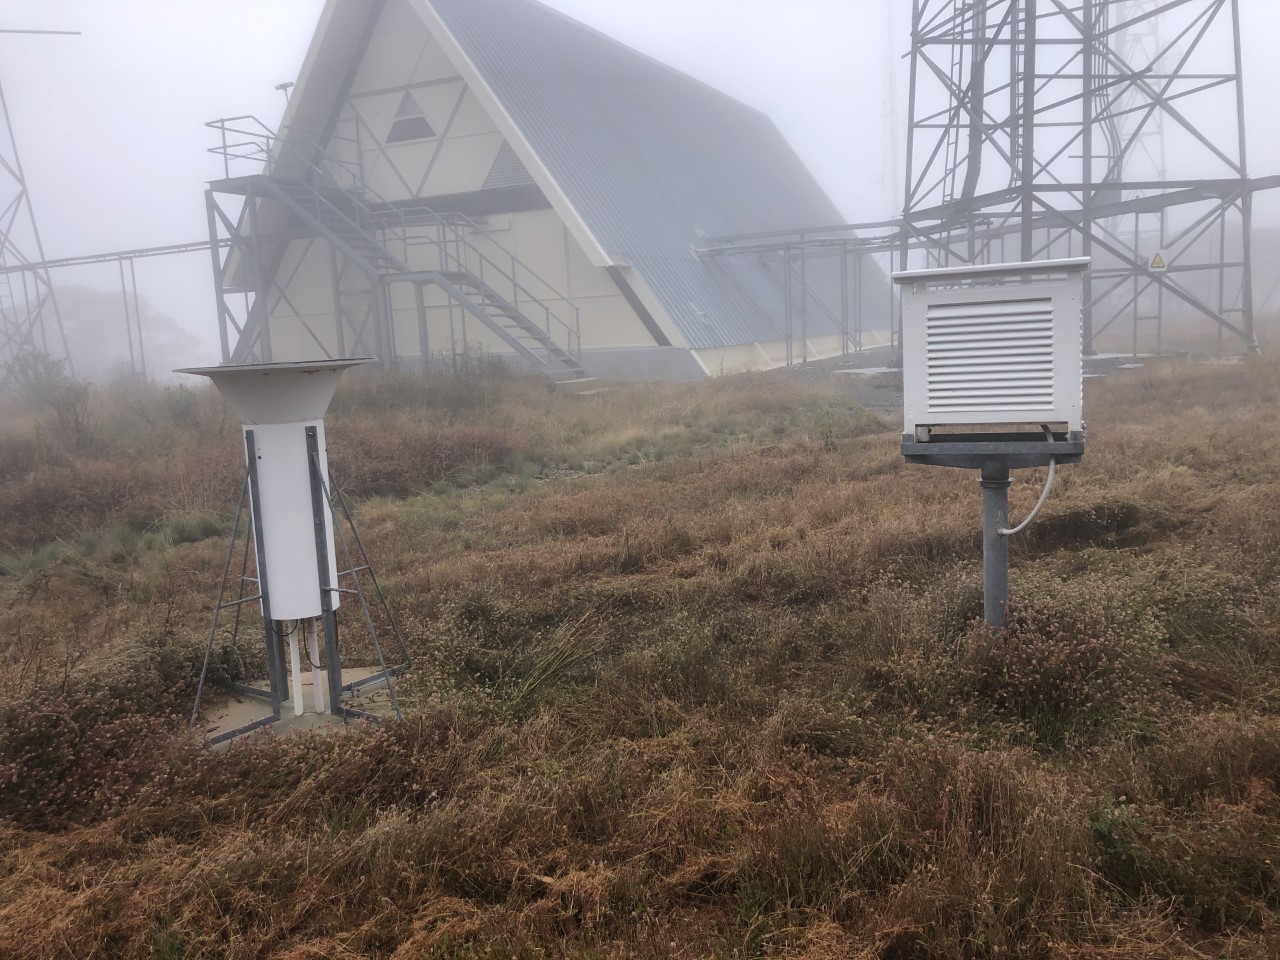 Snapshot from Australia's loneliest little mountain weather station